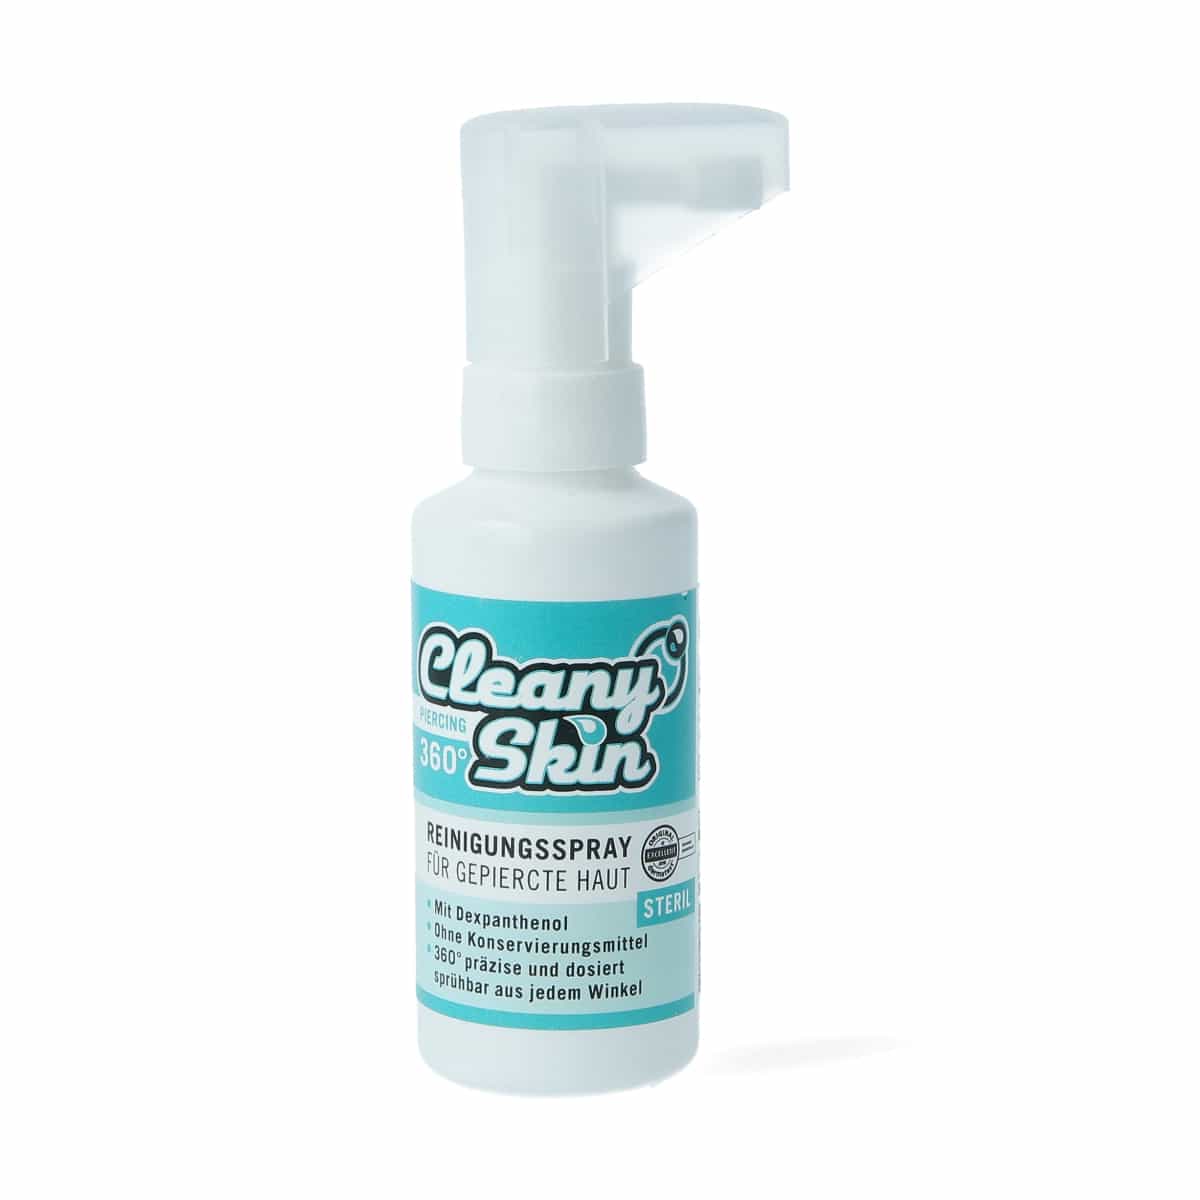 https://www.premier-products.org/media/image/8a/0e/77/cleany-skin-reinigungsspray-50ml-pp-min.jpg